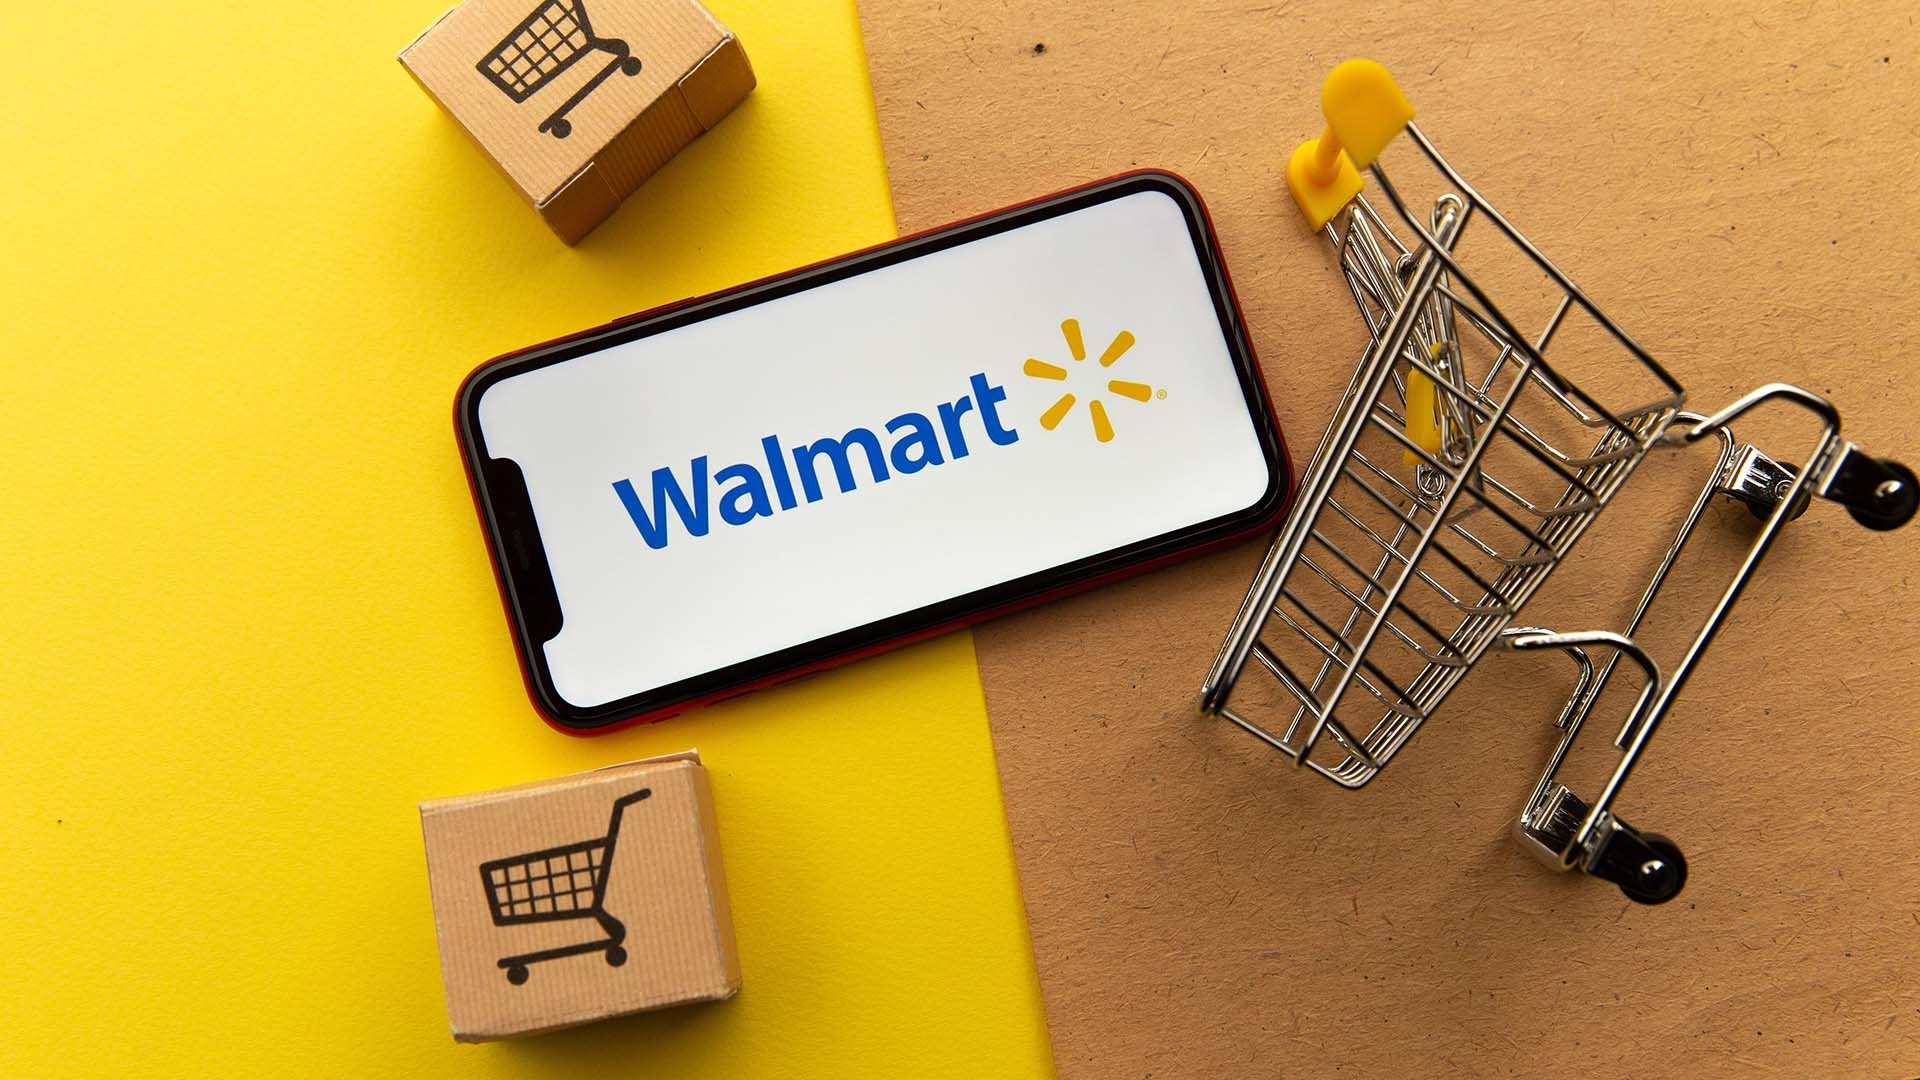 Walmart: Demand-Side Platform (DSP), Marc Lore, Walmart's U.S. e-commerce CEO, Digital expansion. 1920x1080 Full HD Wallpaper.